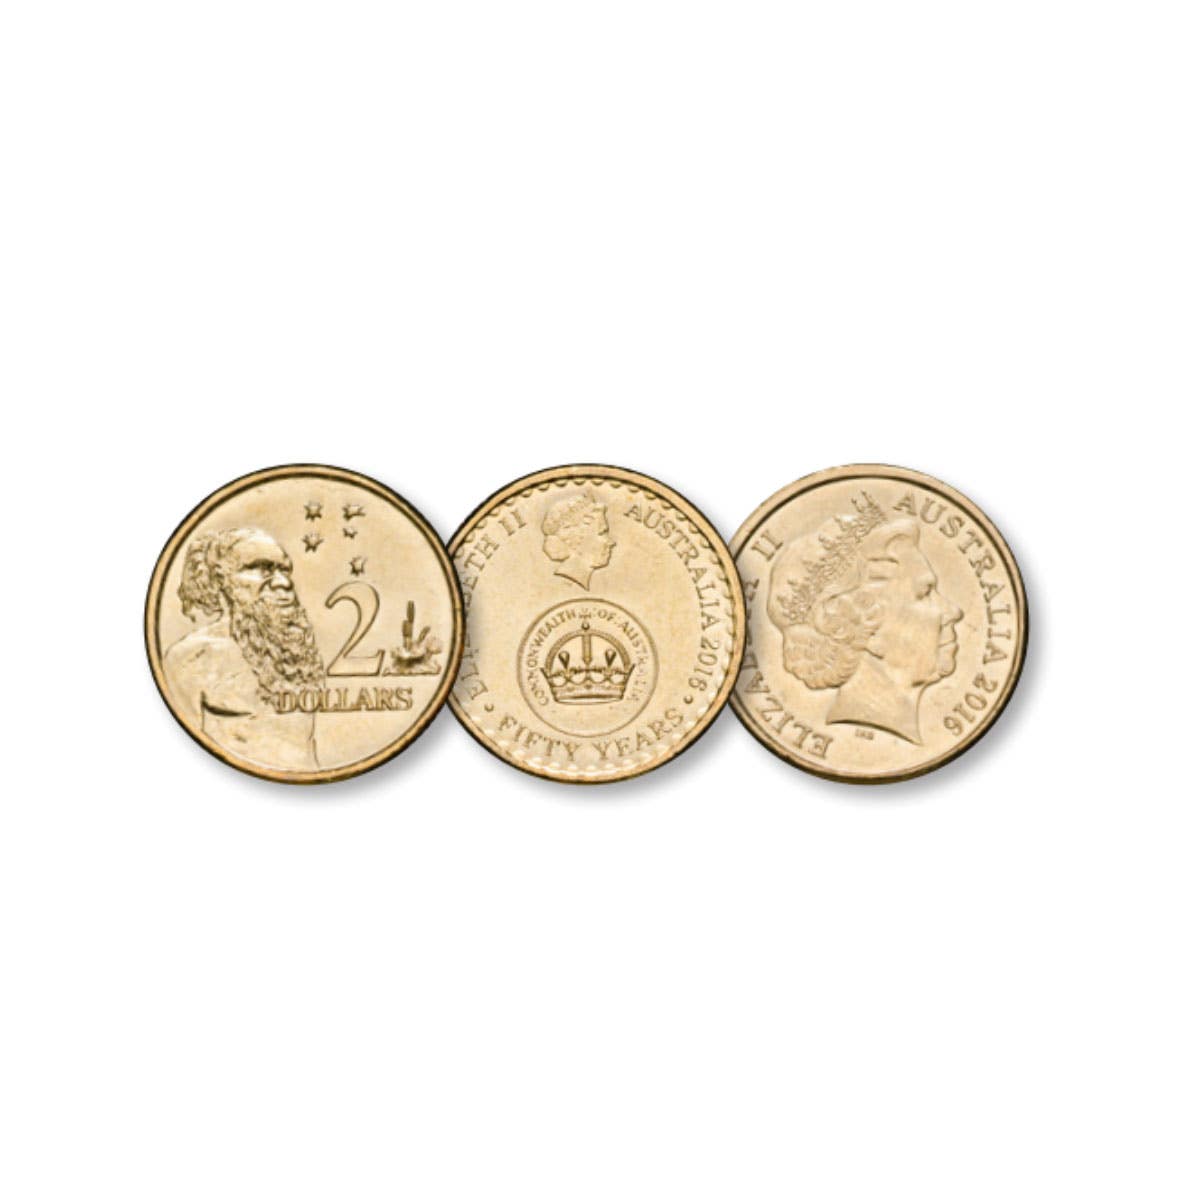 2016 $2 Aboriginal Elder & Decimal Currency 50th Anniversary Pair Uncirculated